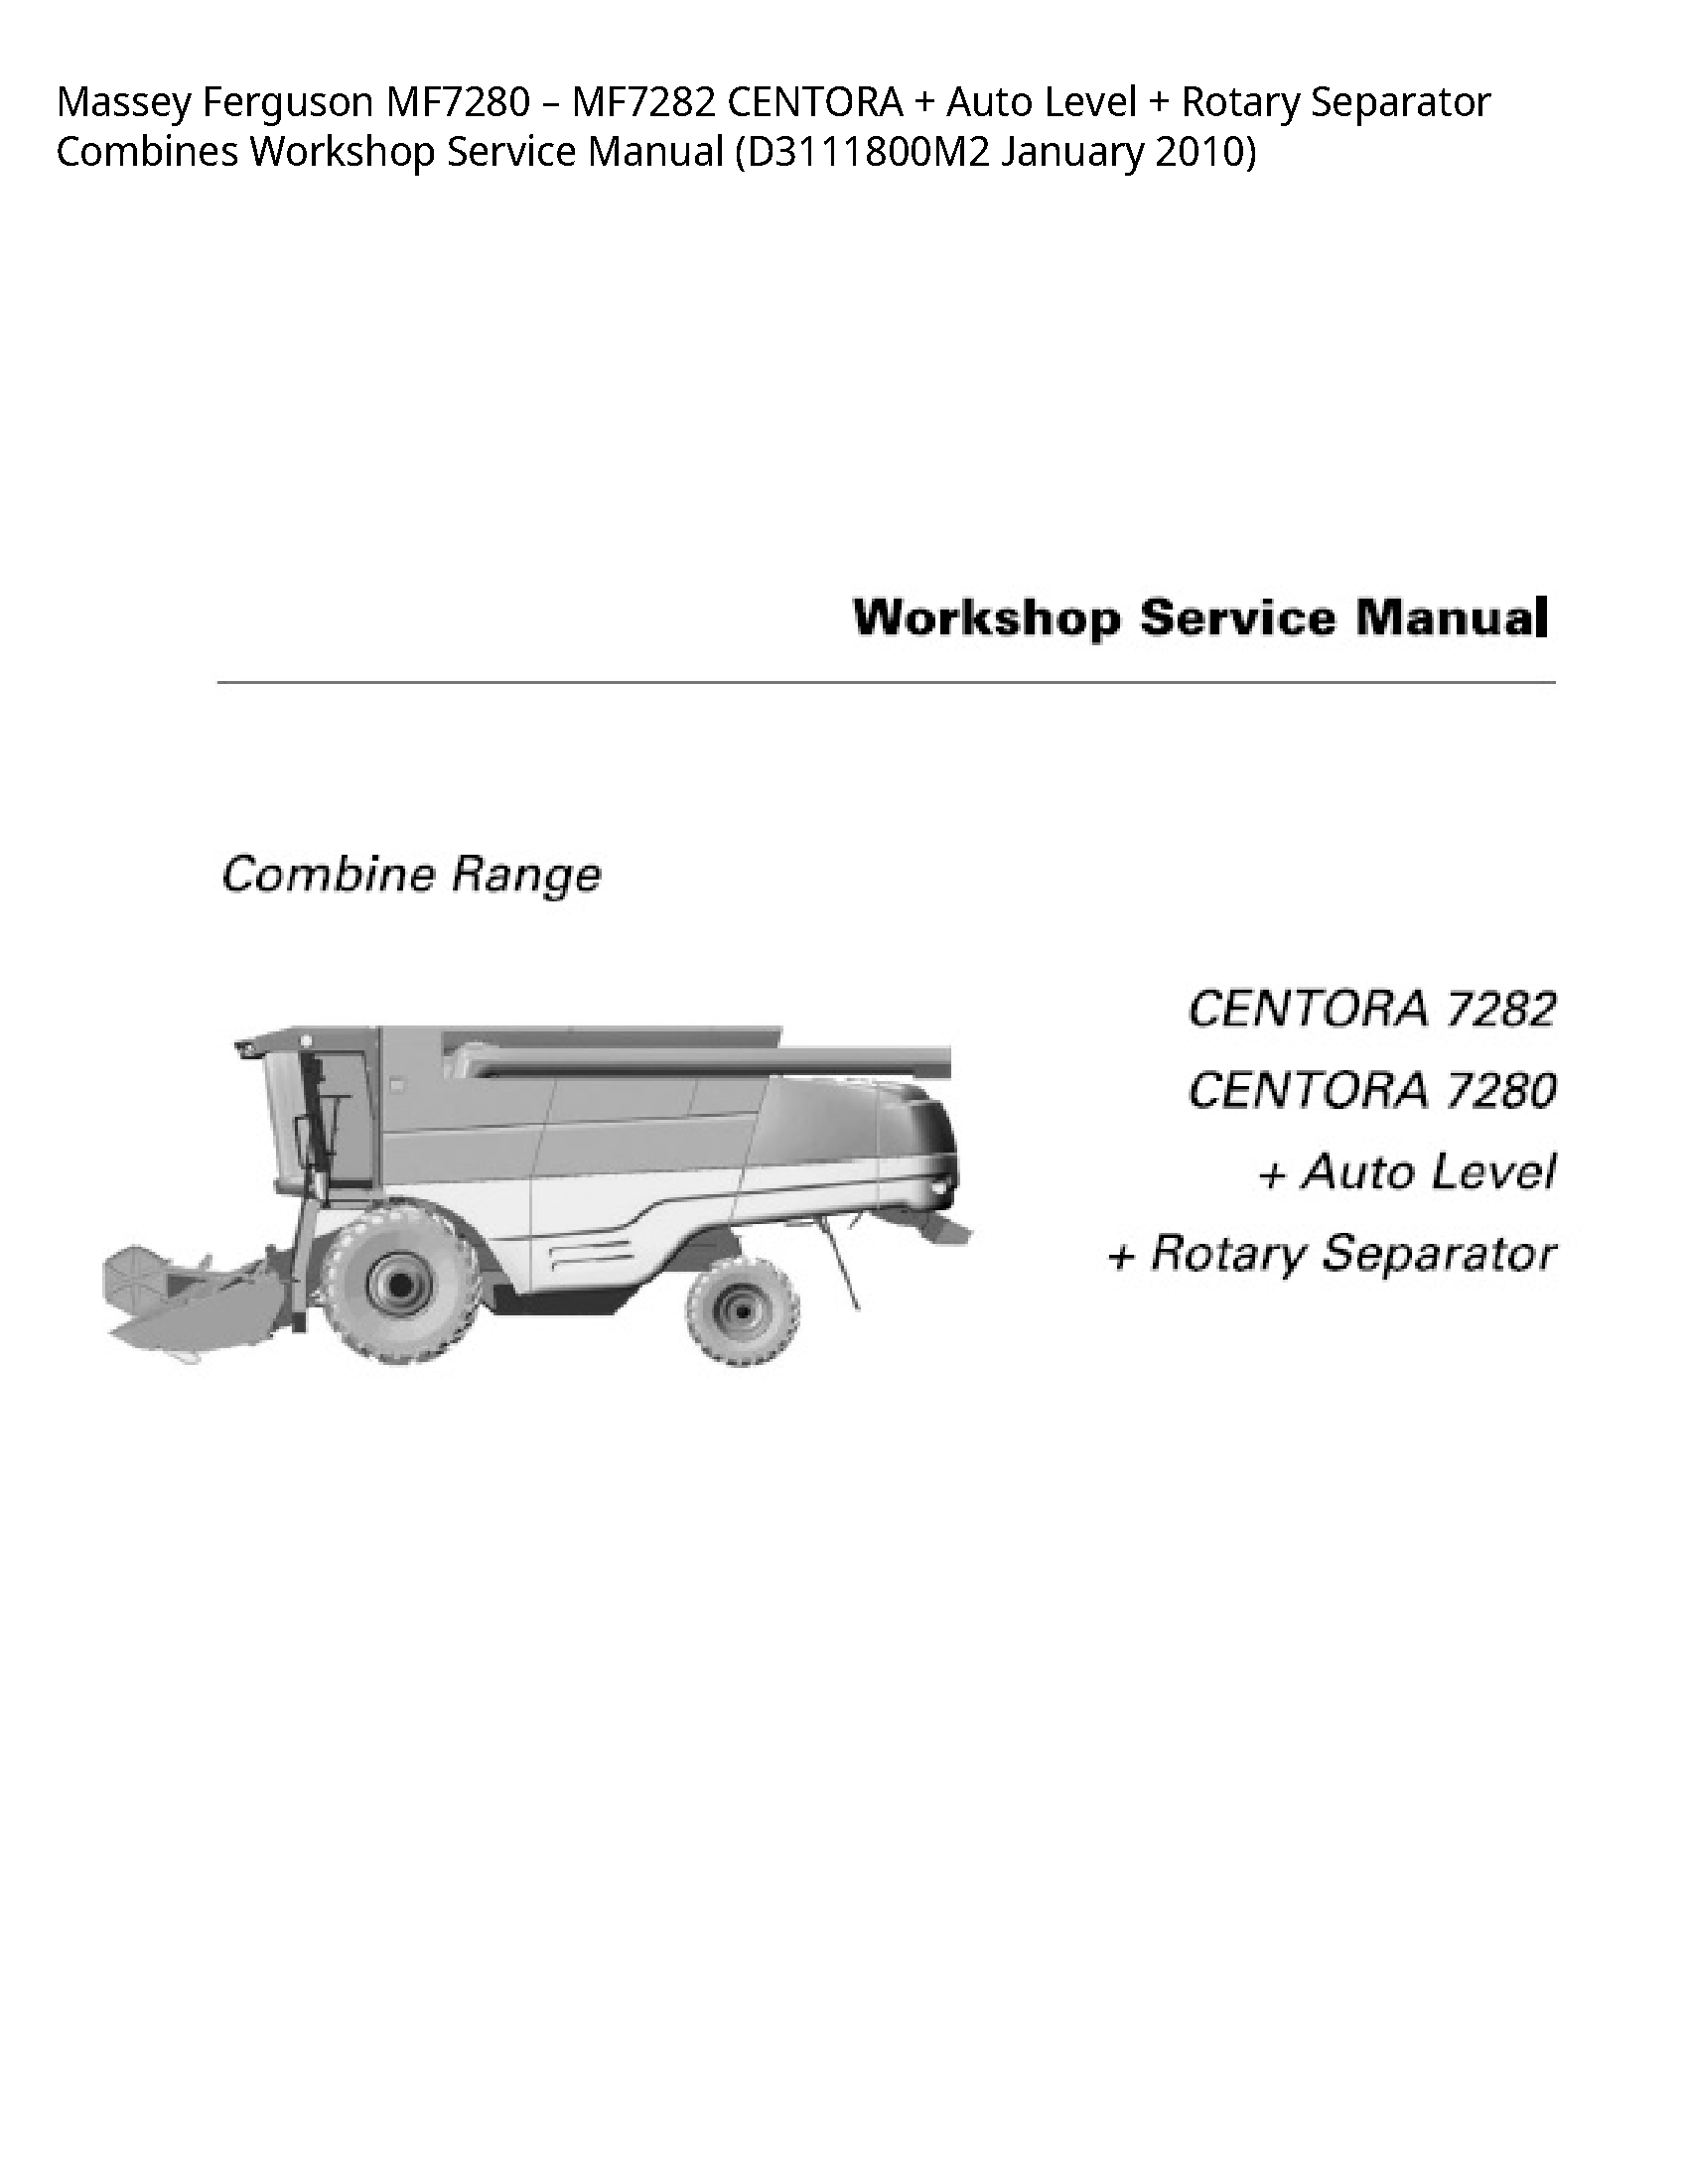 Massey Ferguson MF7280 CENTORA Auto Level Rotary Separator Combines Service manual